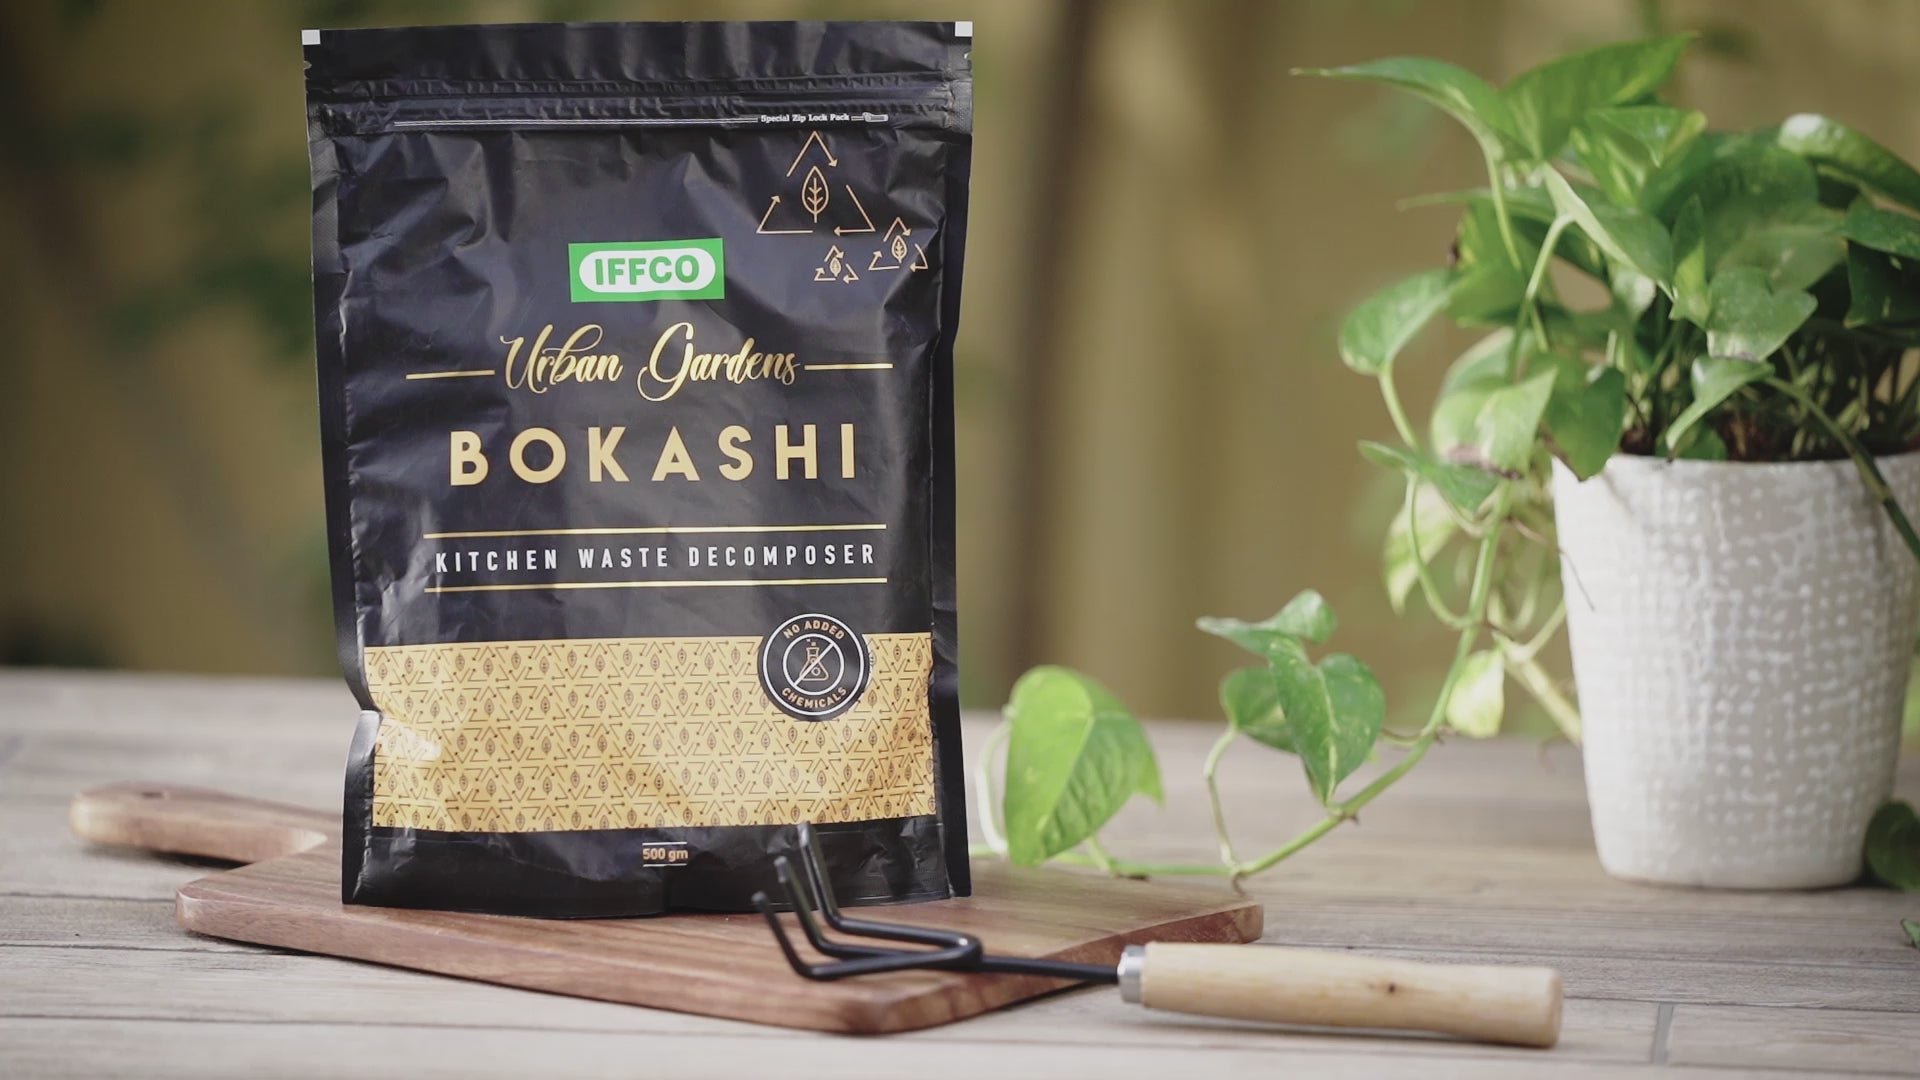 Bokashi - Kitchen Waste Decomposer, Rice Bran + Live Cultures